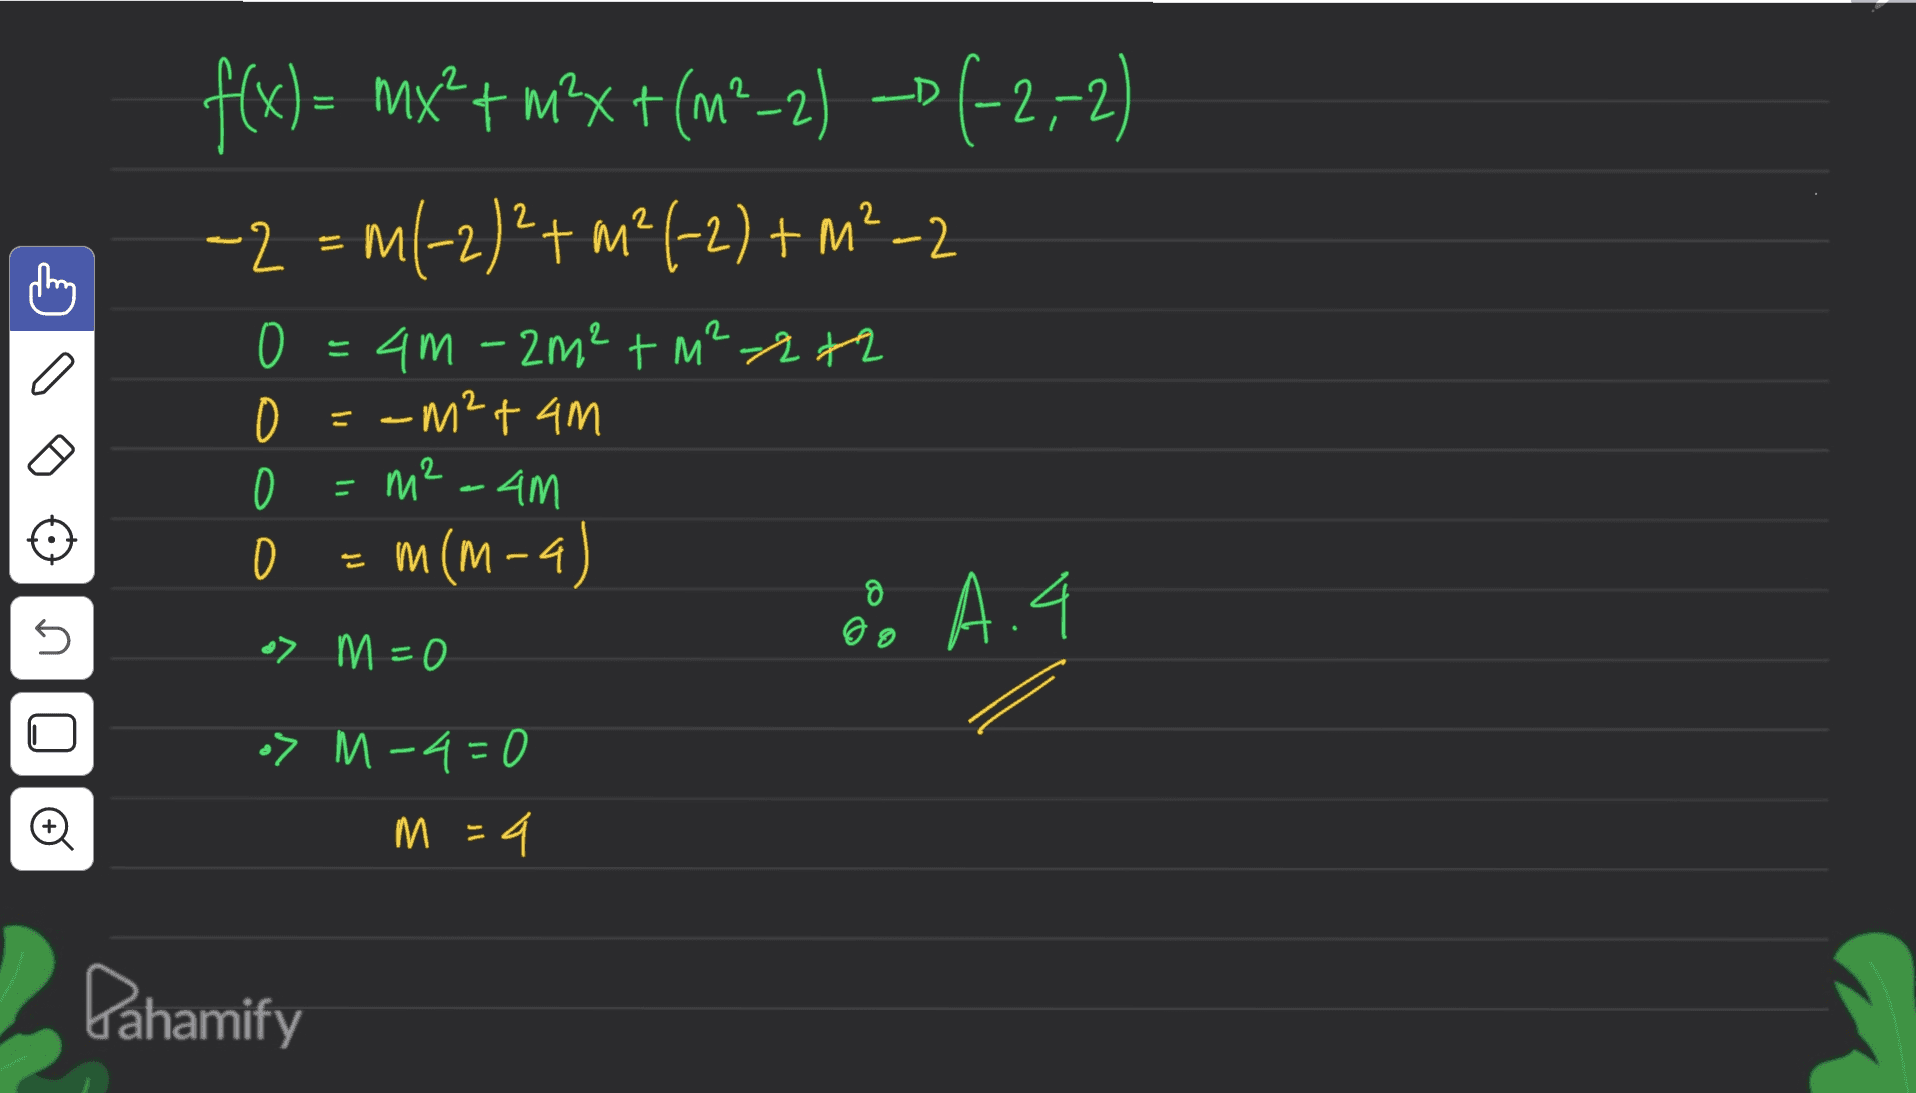 = f(x) = mx*+ mx +(m?-2) -D(-2,-2) -2 = M(-2)2 + m2(-2) + m2-2 O 4m-2m² + m²=2+2 -M2+ am 0 =m² - 4m 0 = m(M-4) n M @ > M=0 =m Ô A.4 s 0 0 o> M-4=0 m = 4 М. : Dahamify 